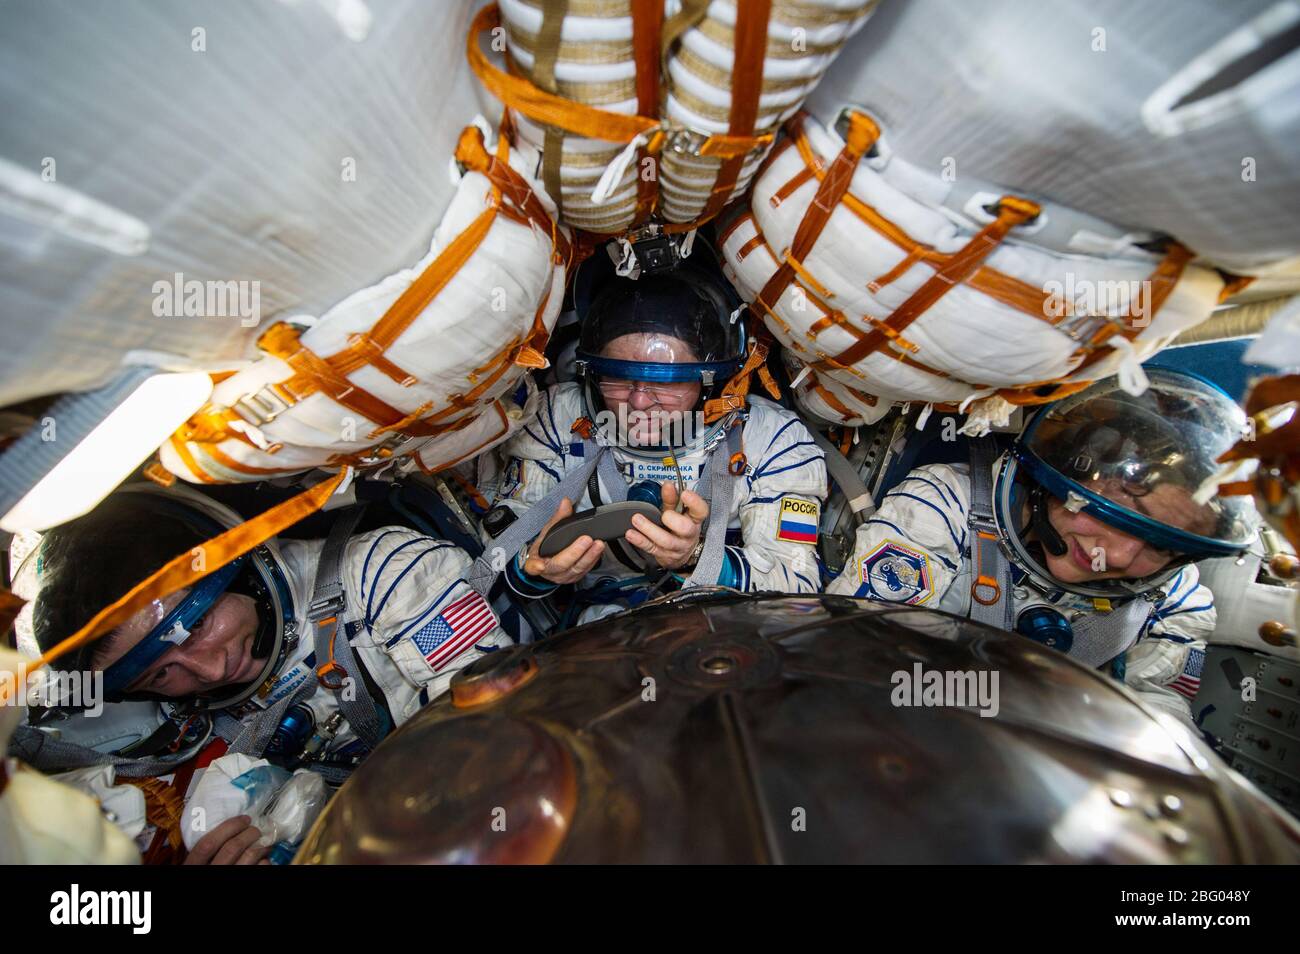 ZHEZKAZGAN, KAZAKHSTAN - 17 April 2020 - Expedition 62 crew members Andrew Morgan of NASA, left, Roscosmos cosmonaut Oleg Skripochka, center, and NASA Stock Photo